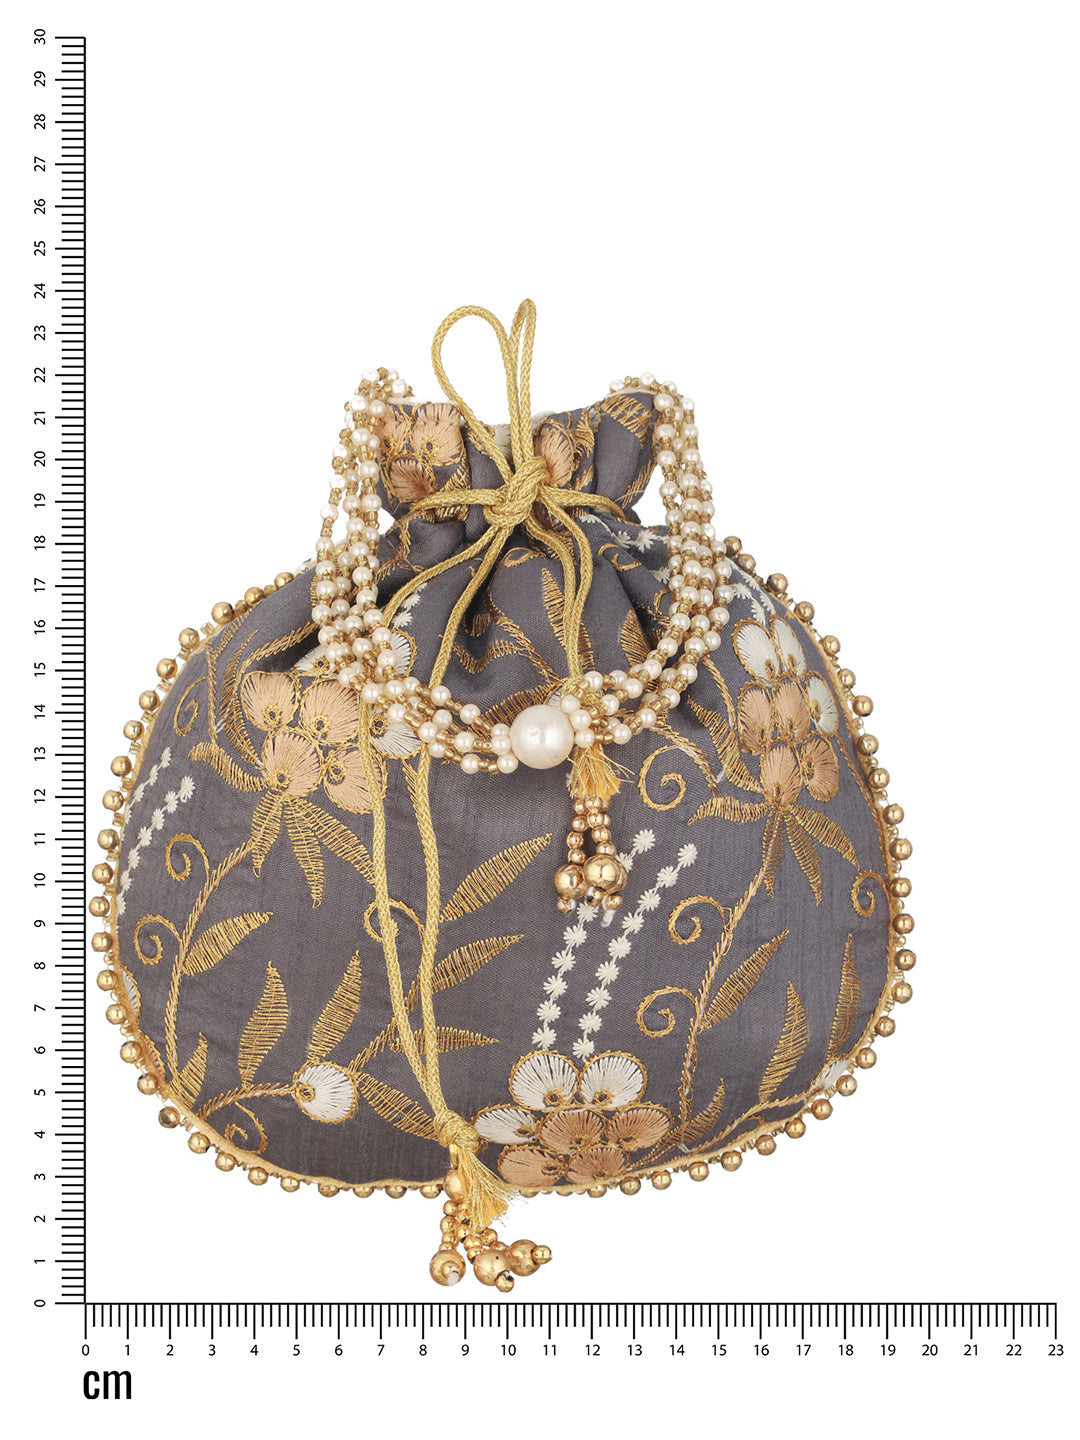 Grey & Gold Embroidered Embellished Potli Clutch - Jazzandsizzle